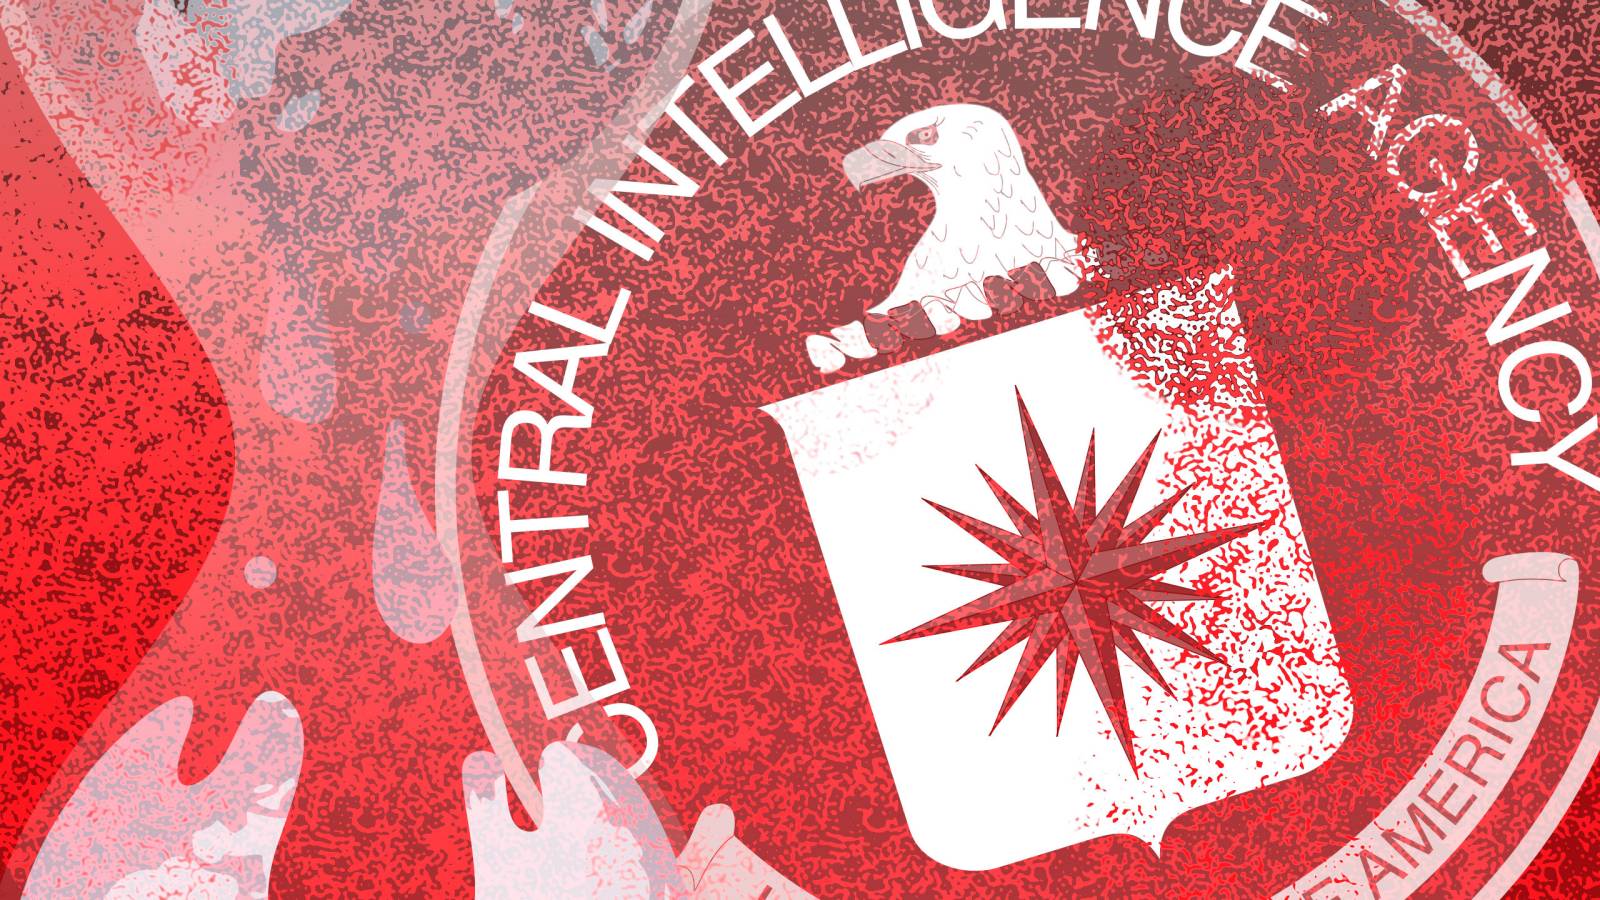 CIA espionage